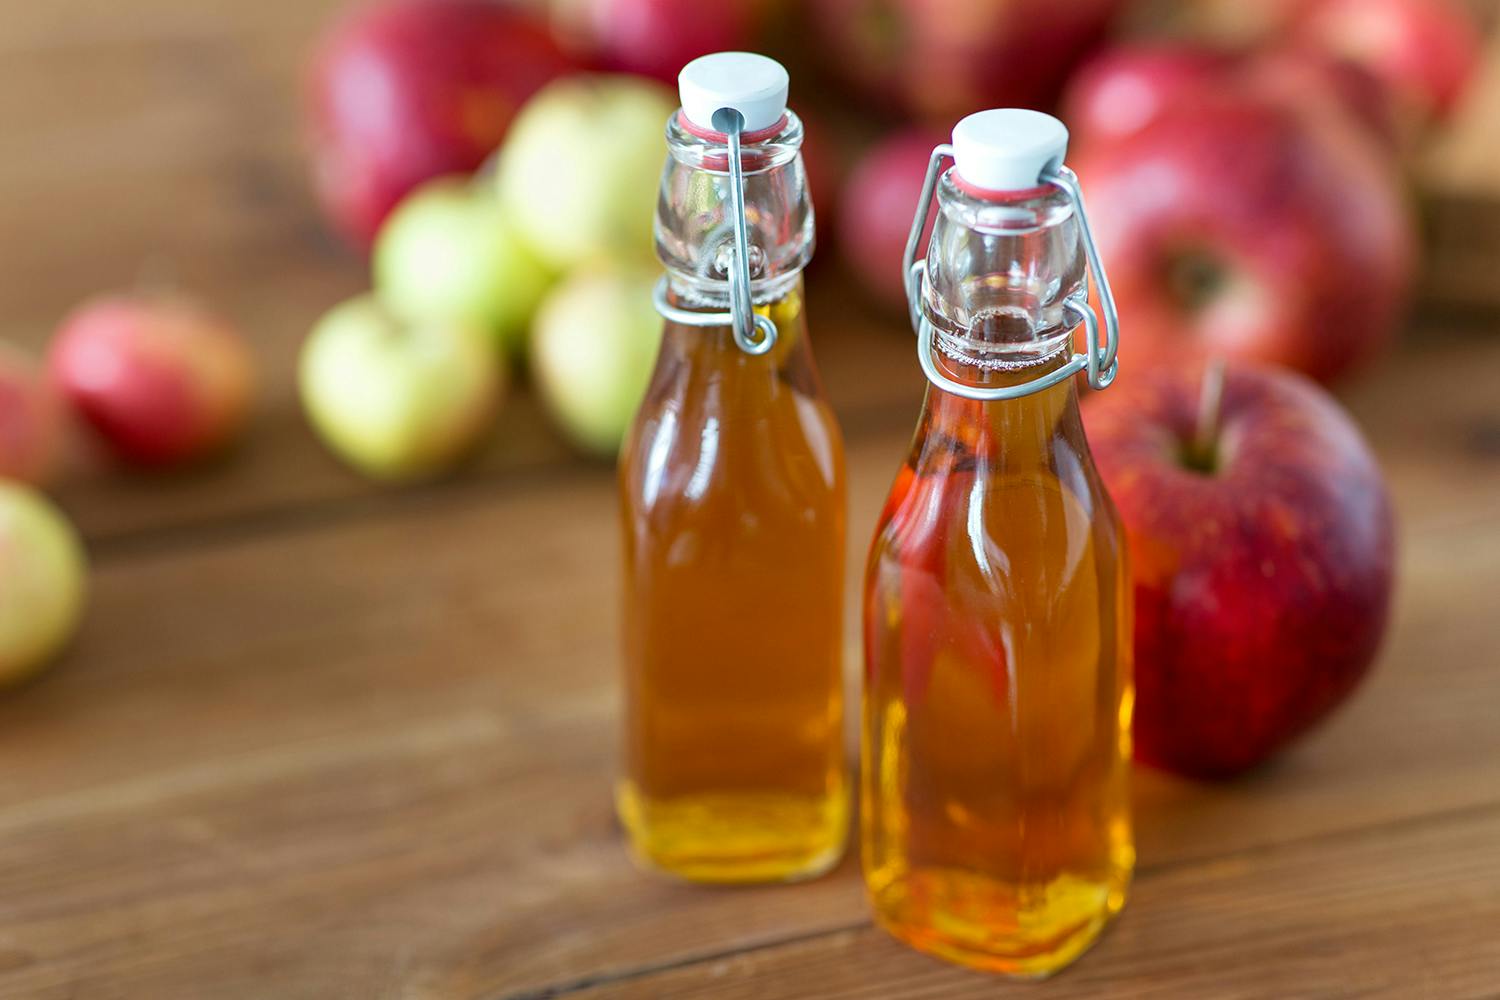 glass bottles of vinegar on table with apples